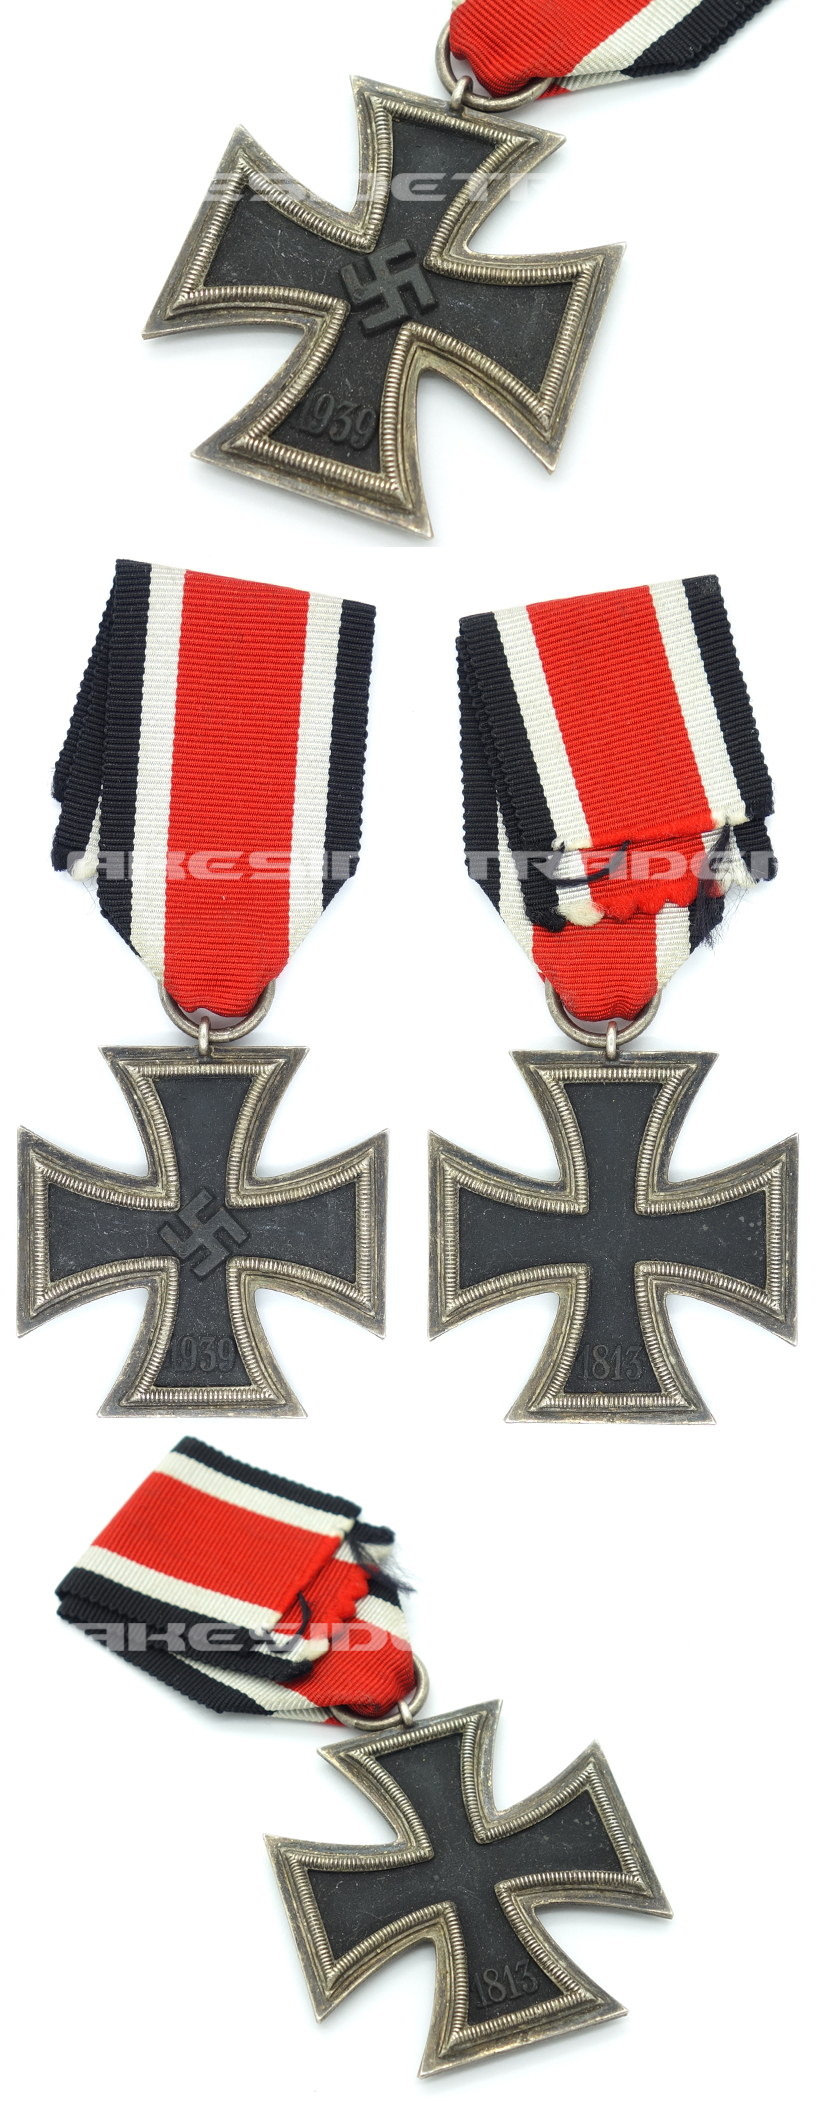 2nd Class Iron Cross by Christian Lauer